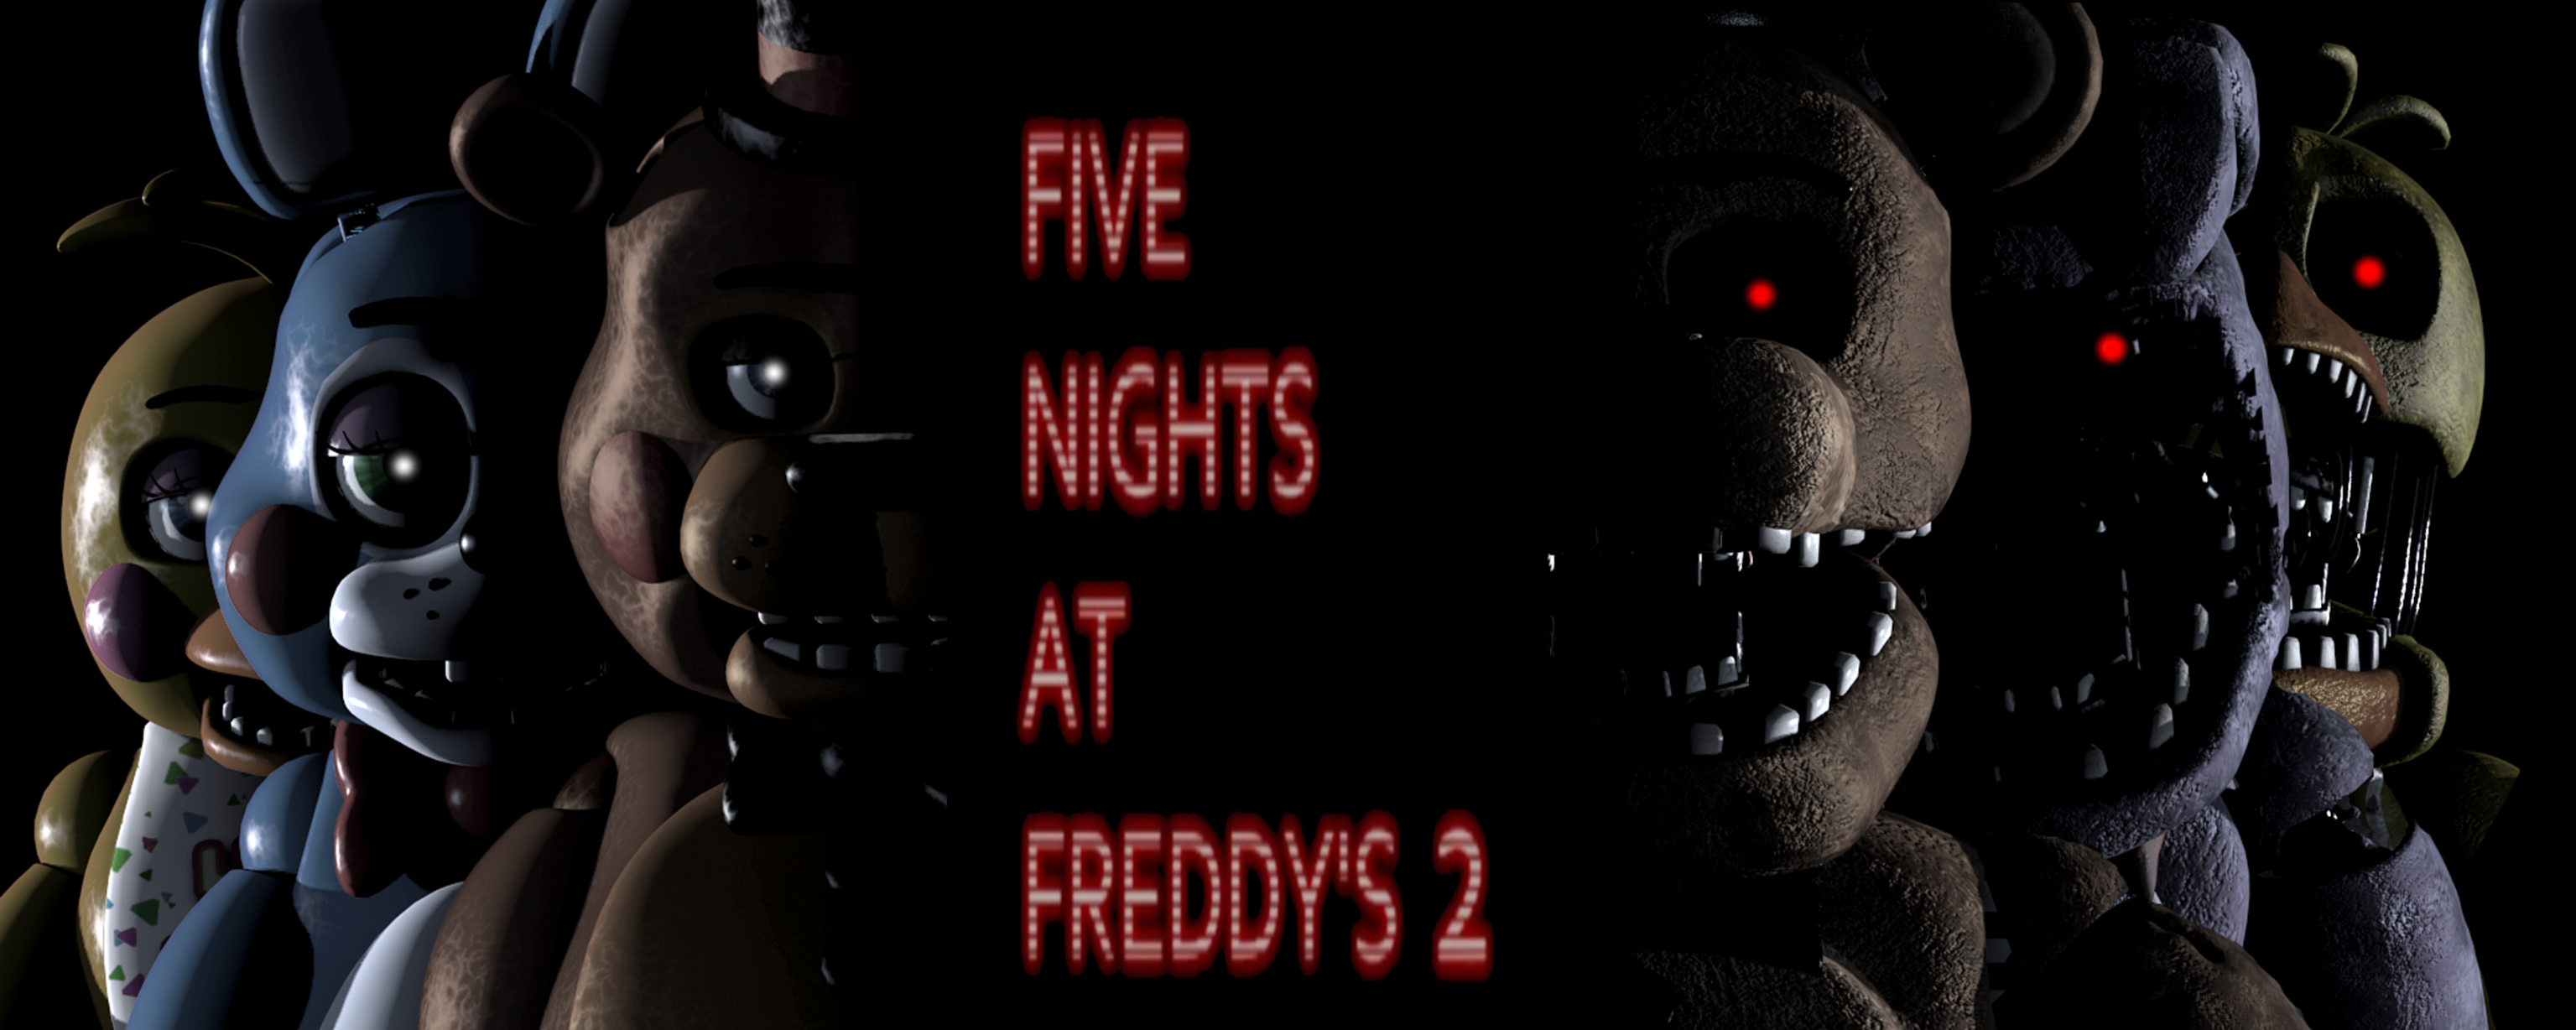 98+] Five Nights At Freddy's Wallpapers - WallpaperSafari